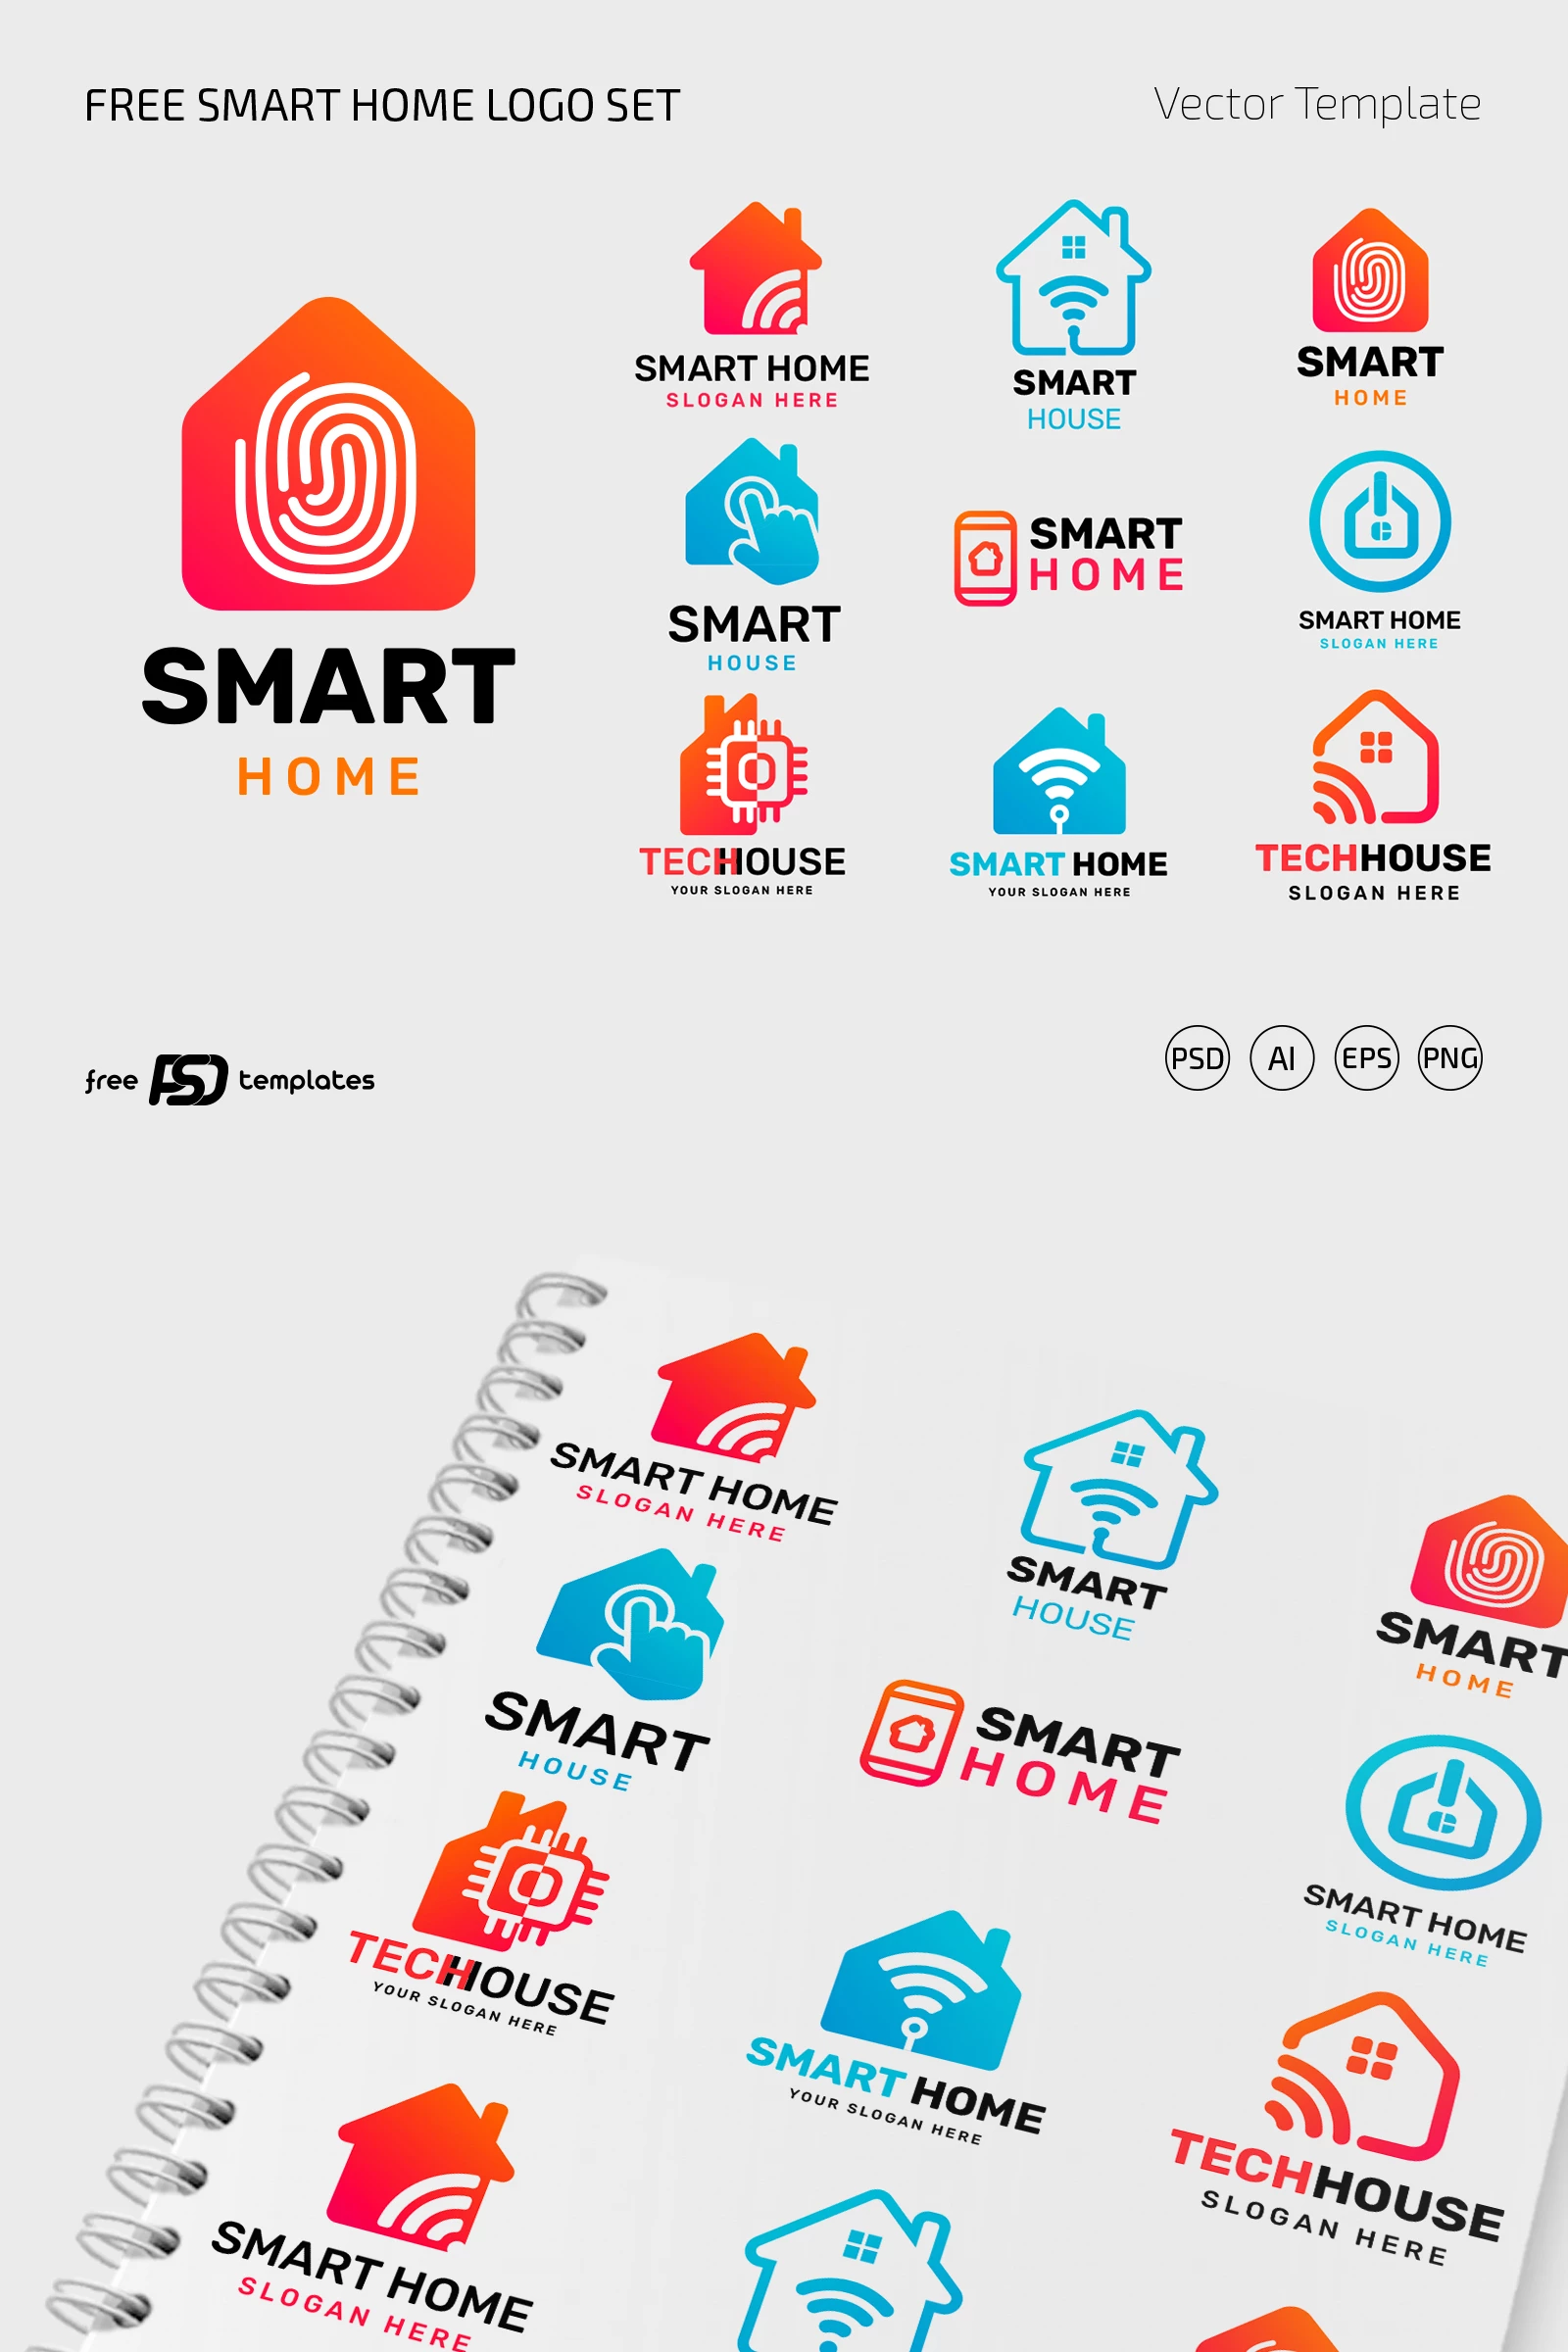 Free Smart Home Logo Set